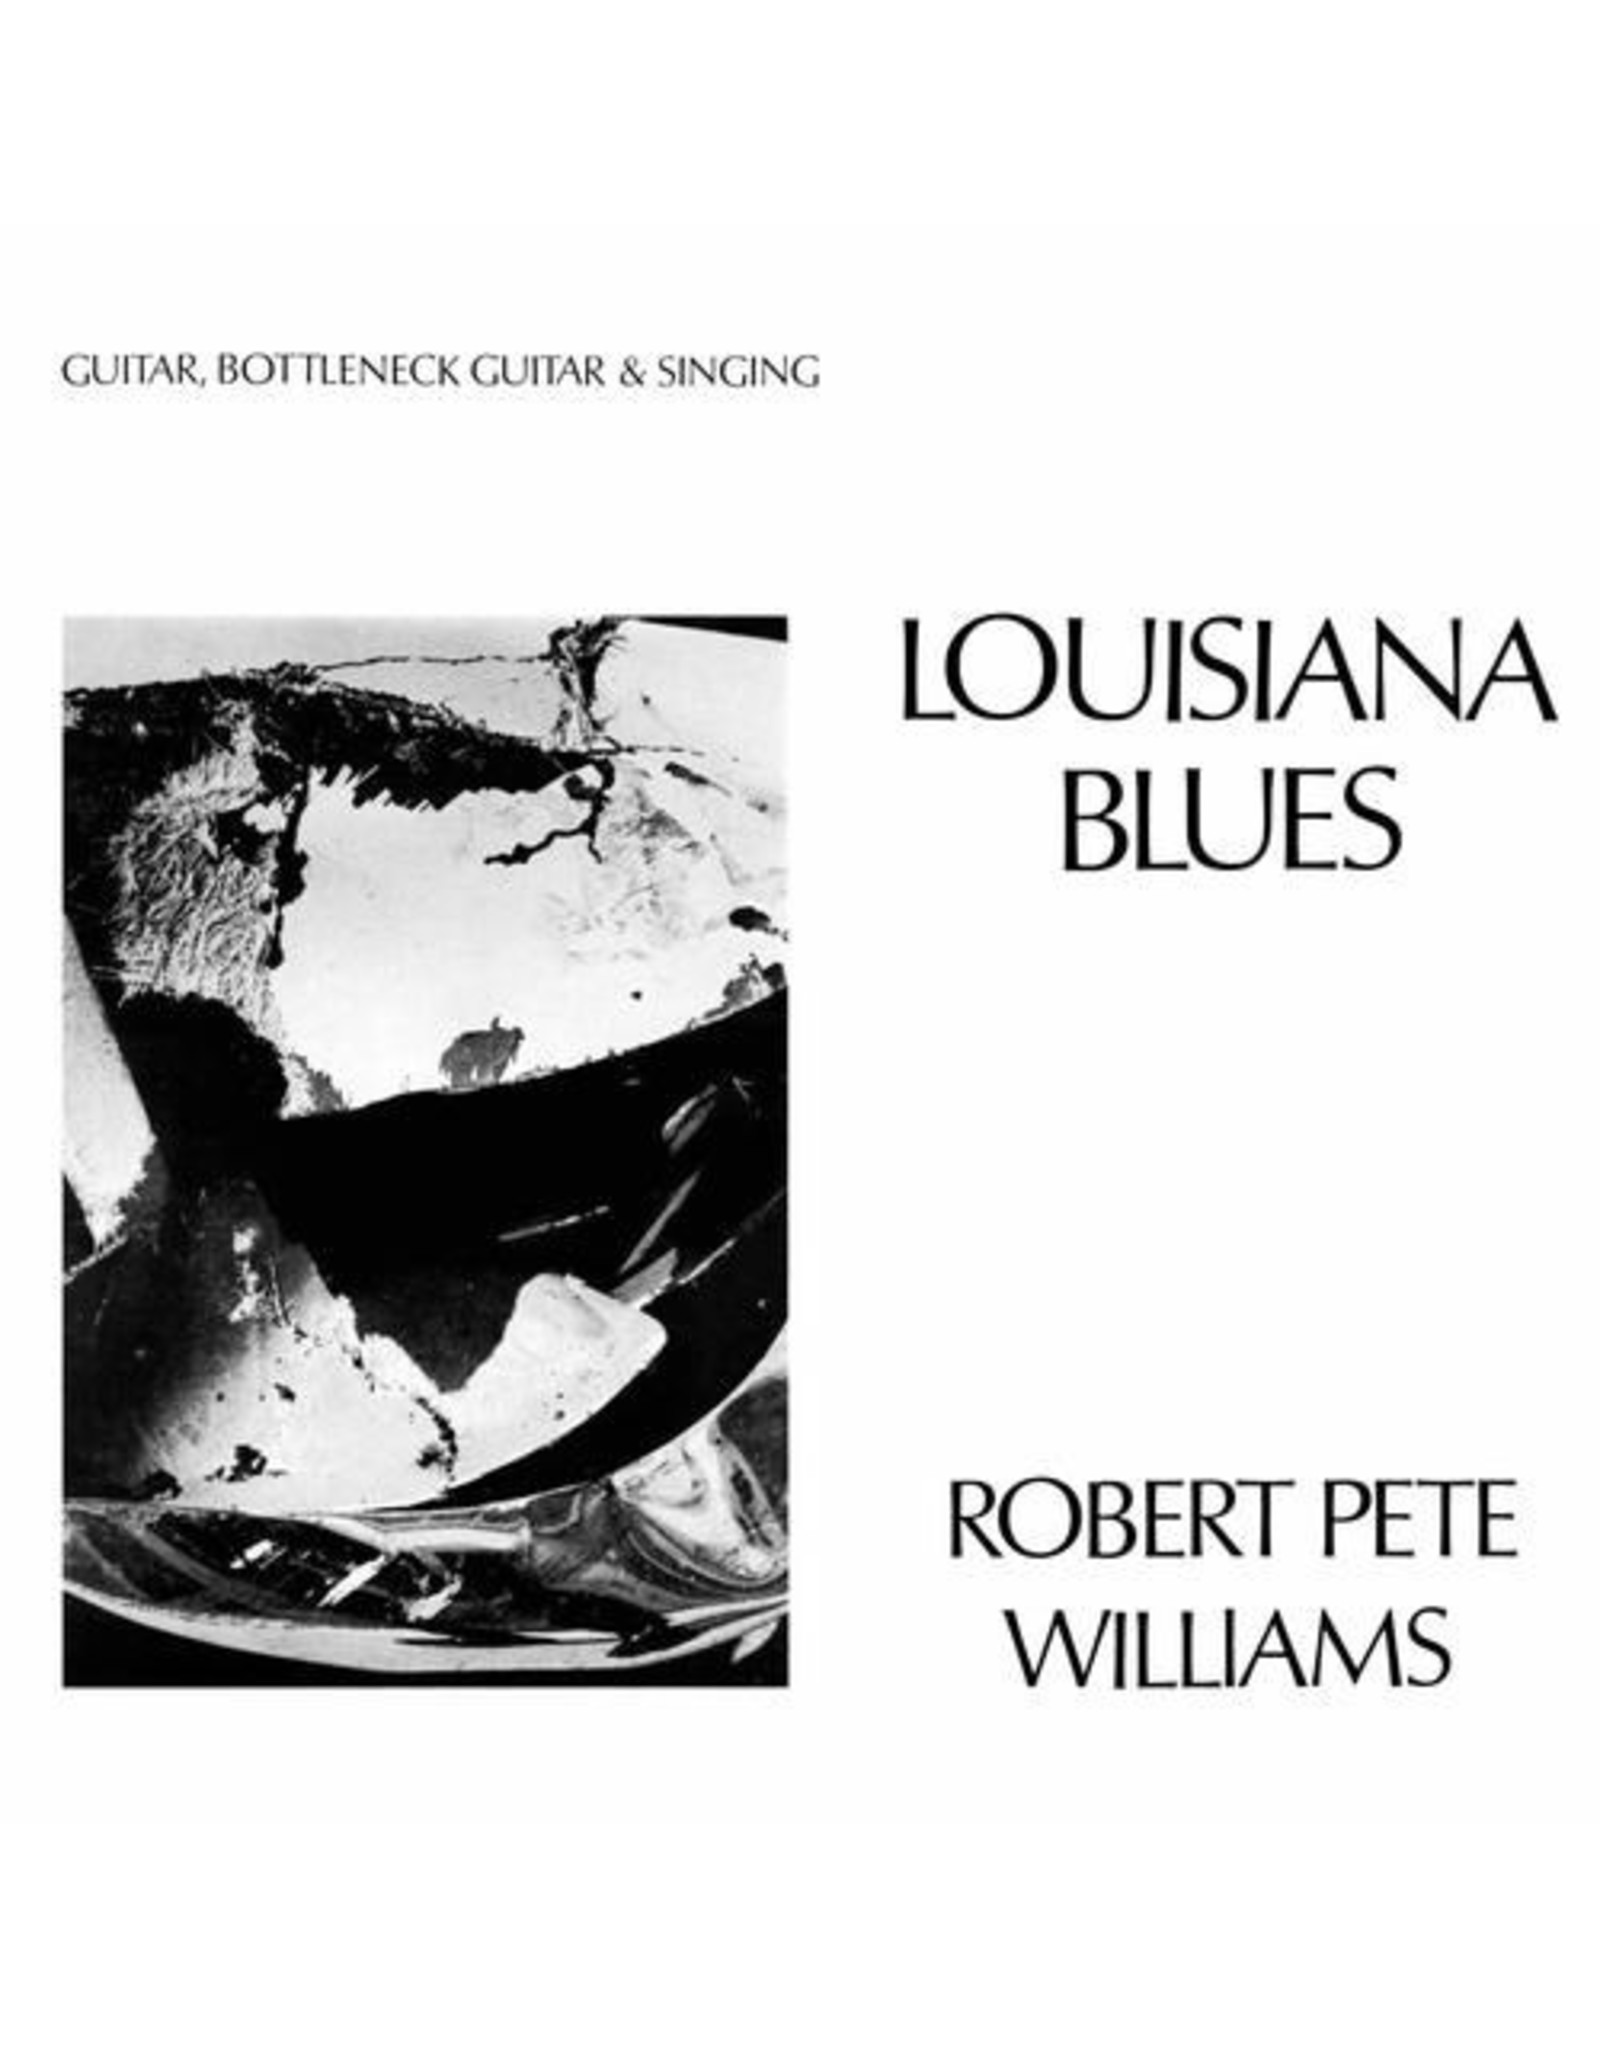 New Vinyl Robert Pete Williams - Louisiana Blues (Colored) LP